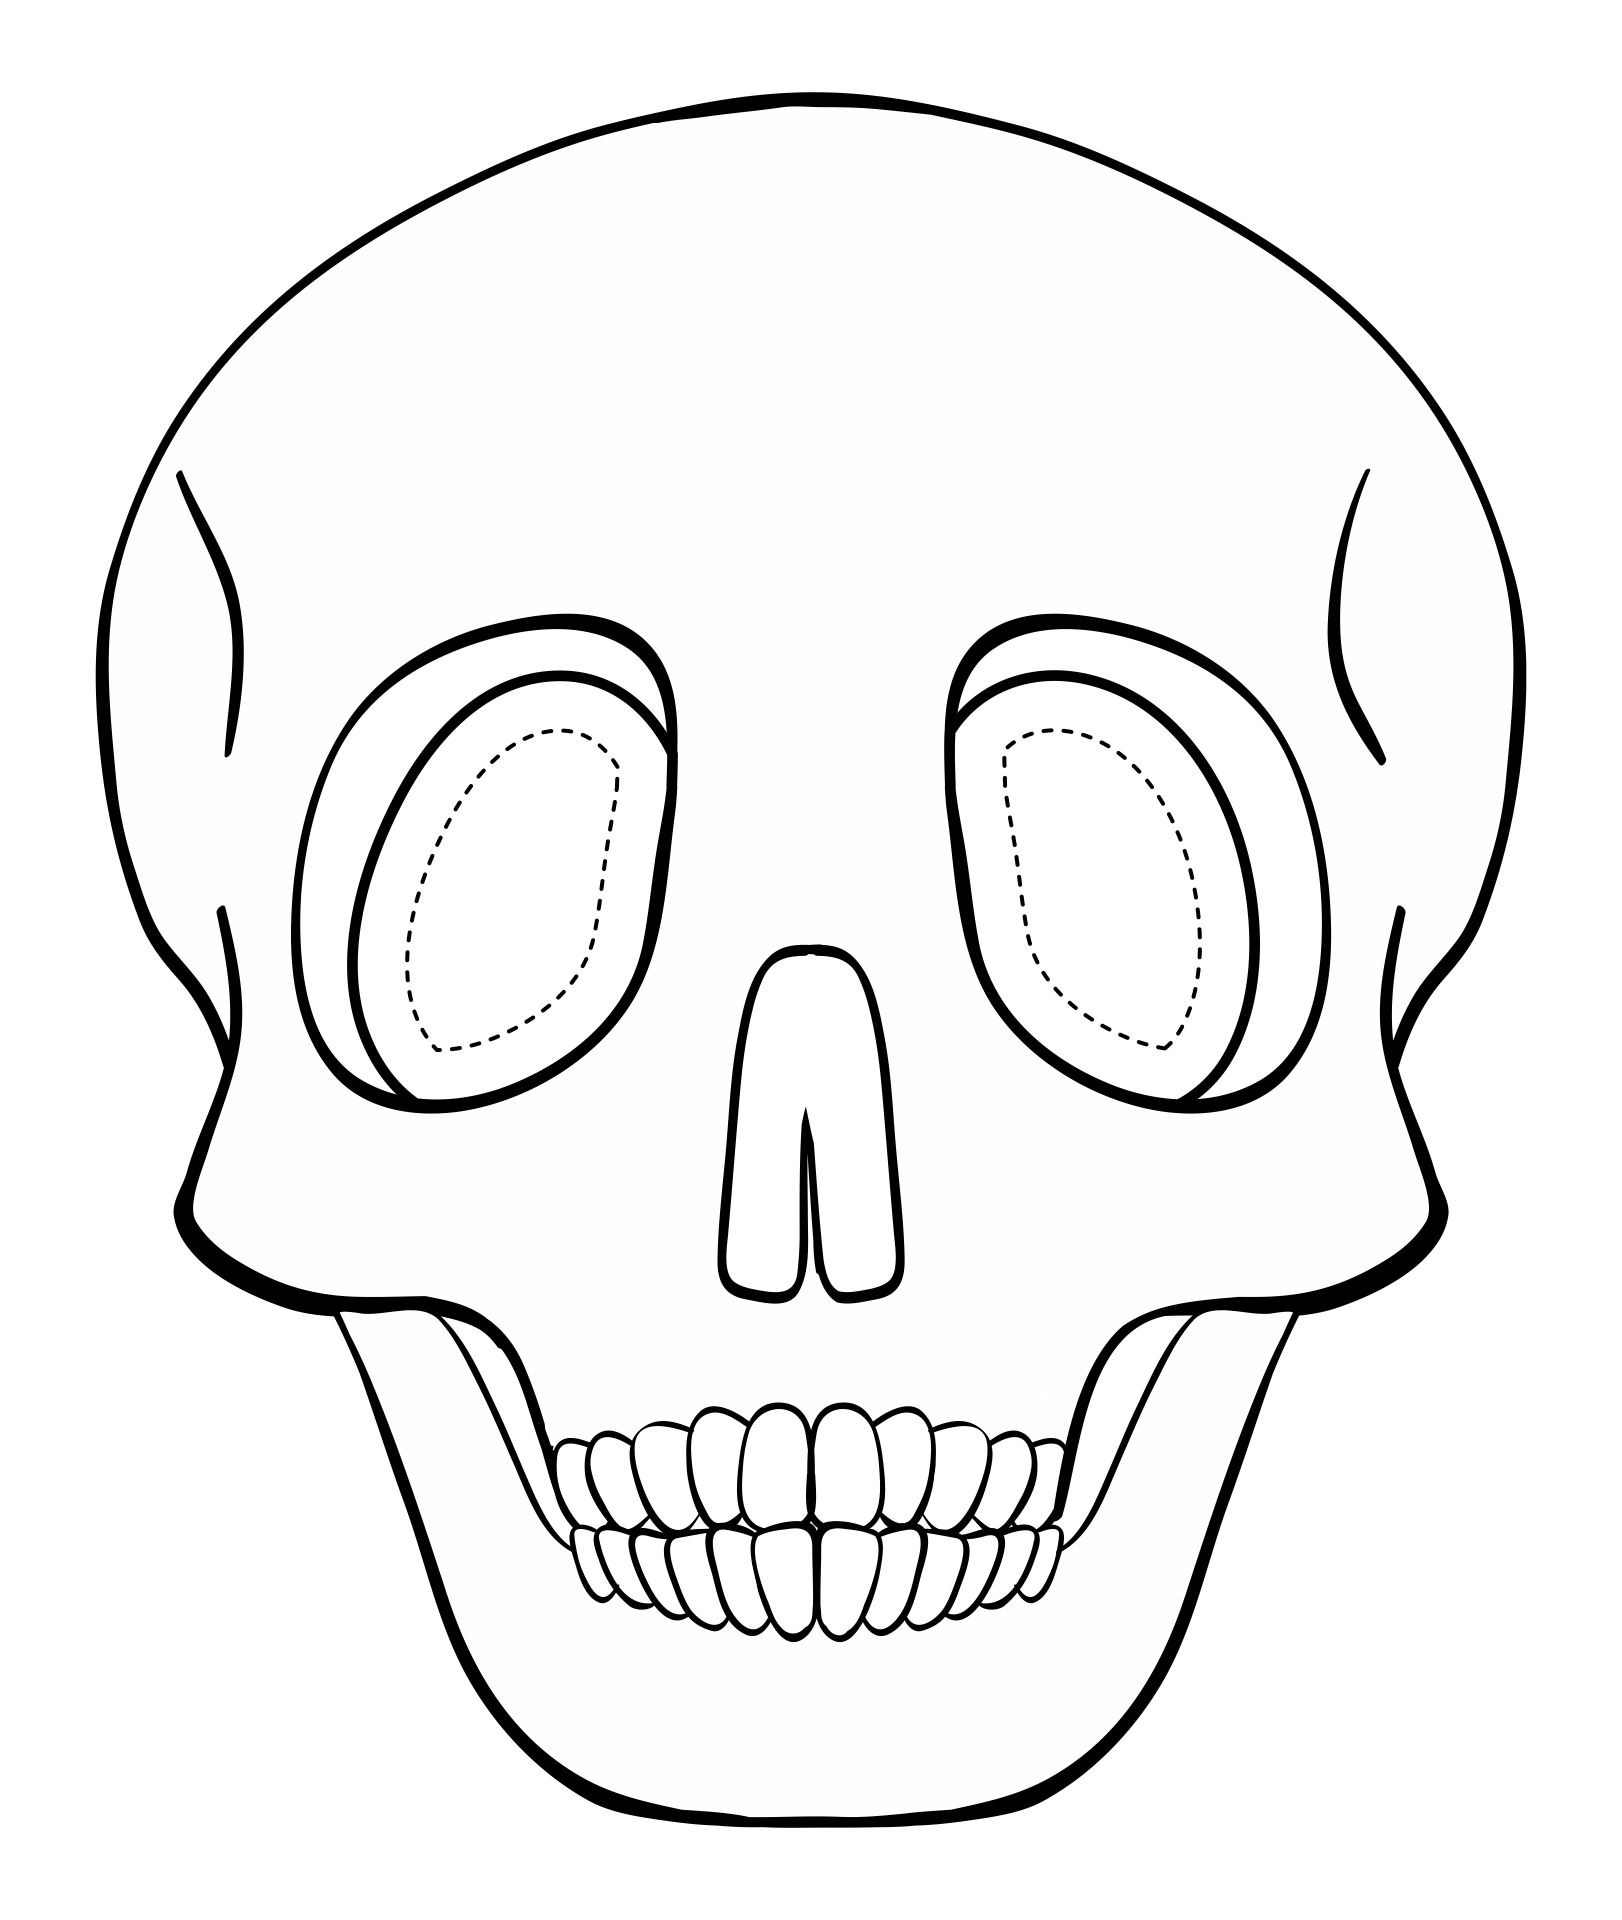 Scary Halloween Mask Templates - 15 Free PDF Printables | Printablee